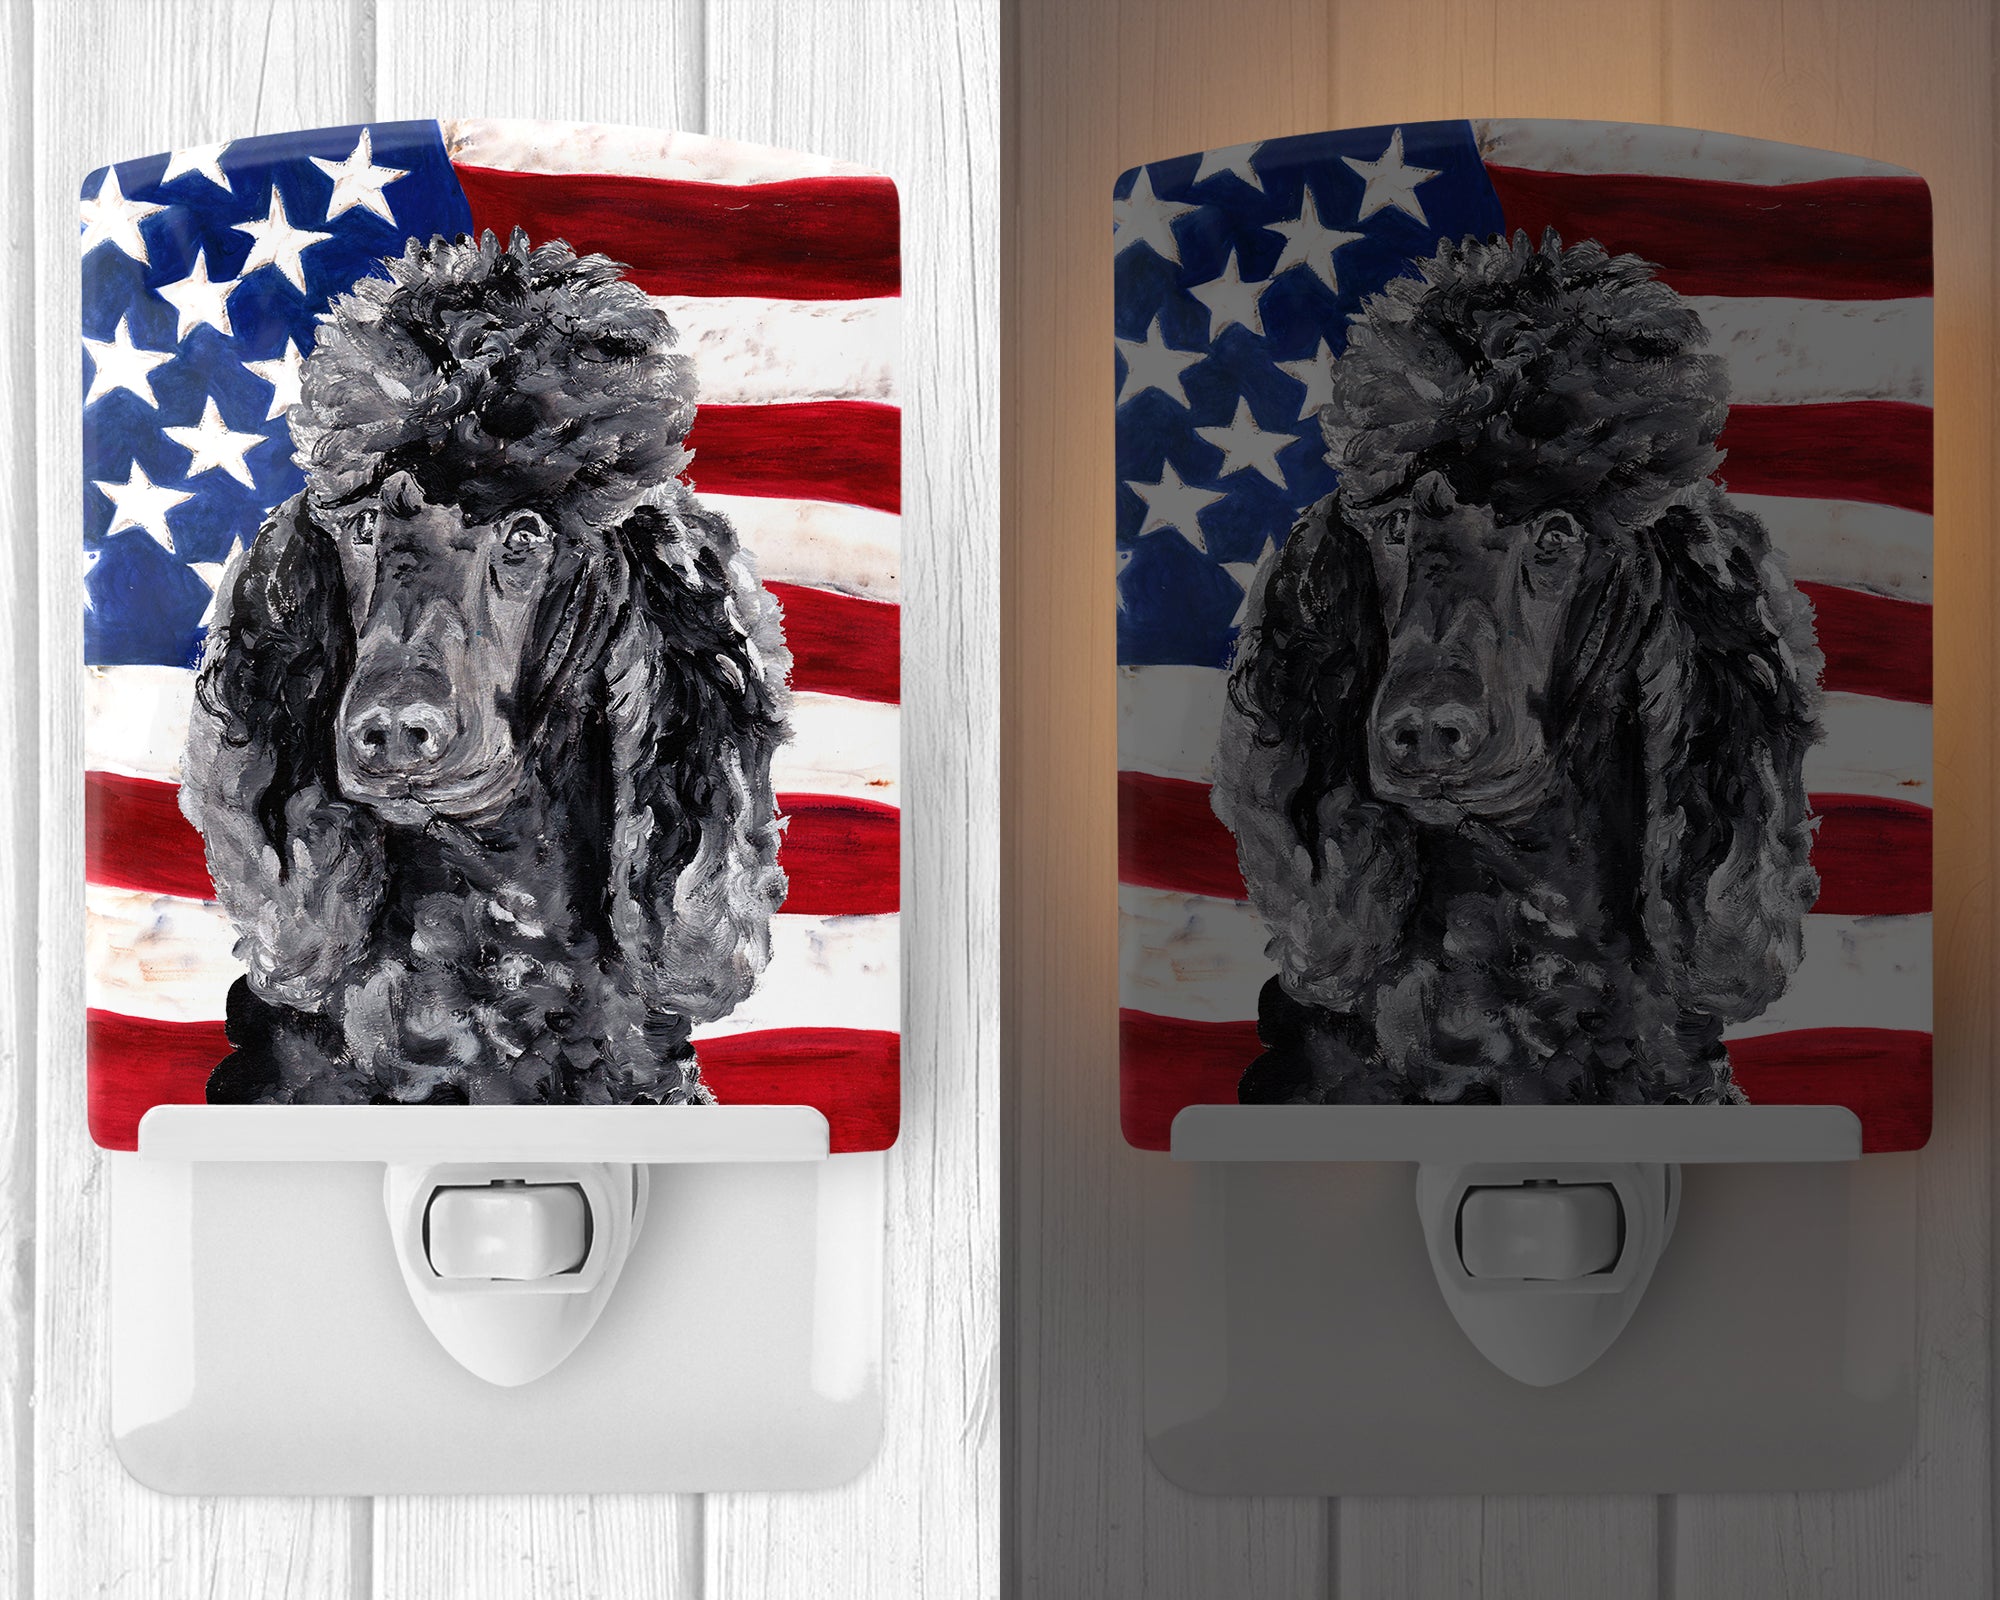 Black Standard Poodle with American Flag USA Ceramic Night Light SC9626CNL - the-store.com